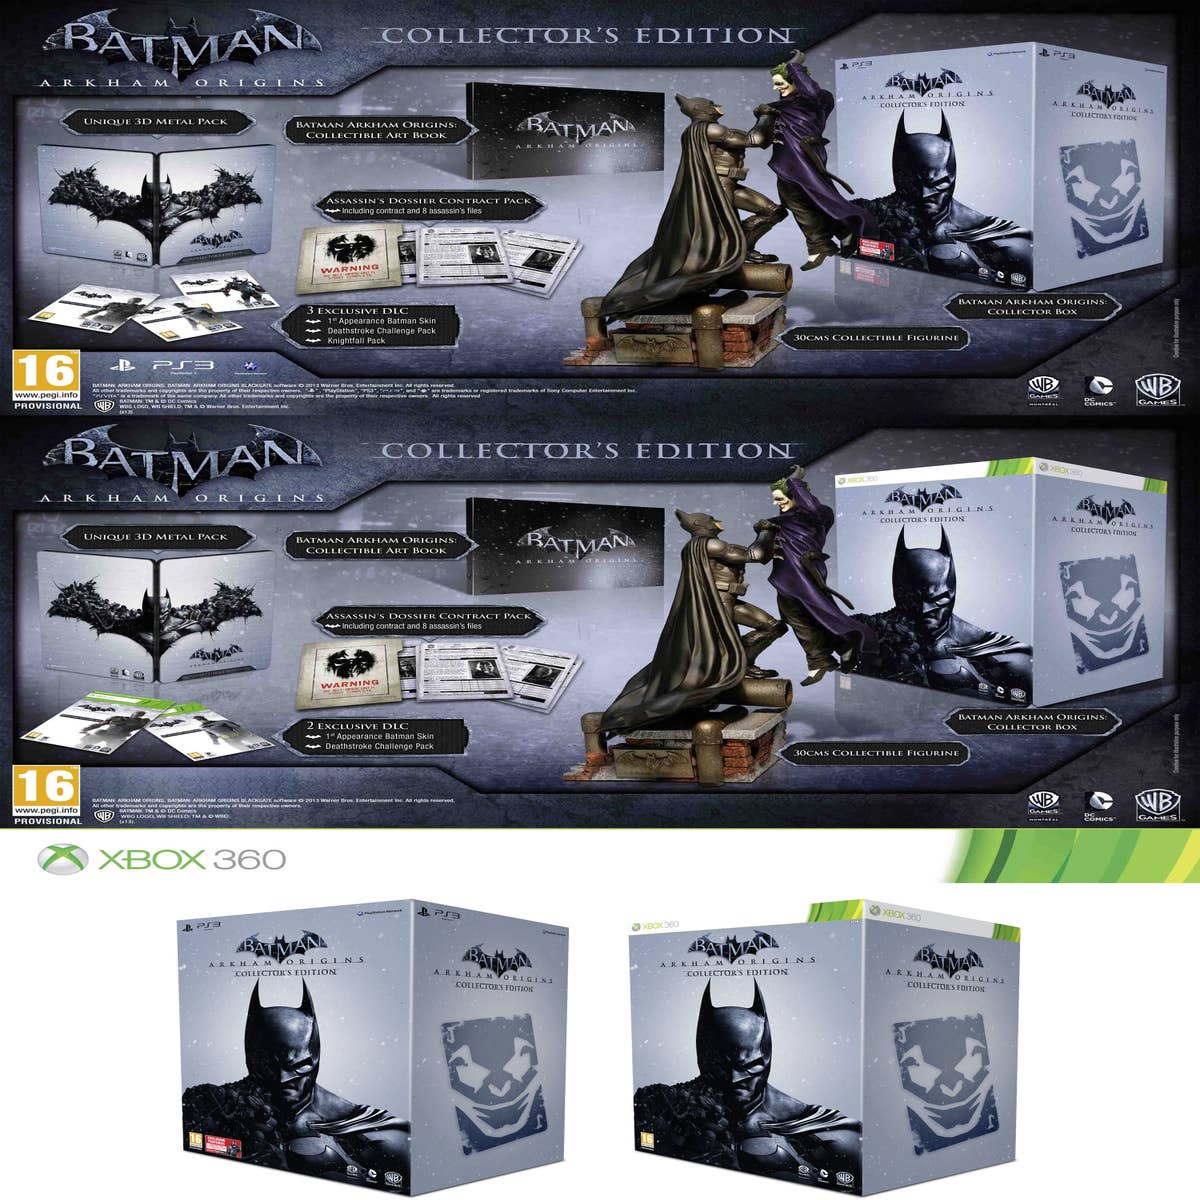 Clutch More Clutter with Batman: Arkham Origins' Collector's Set